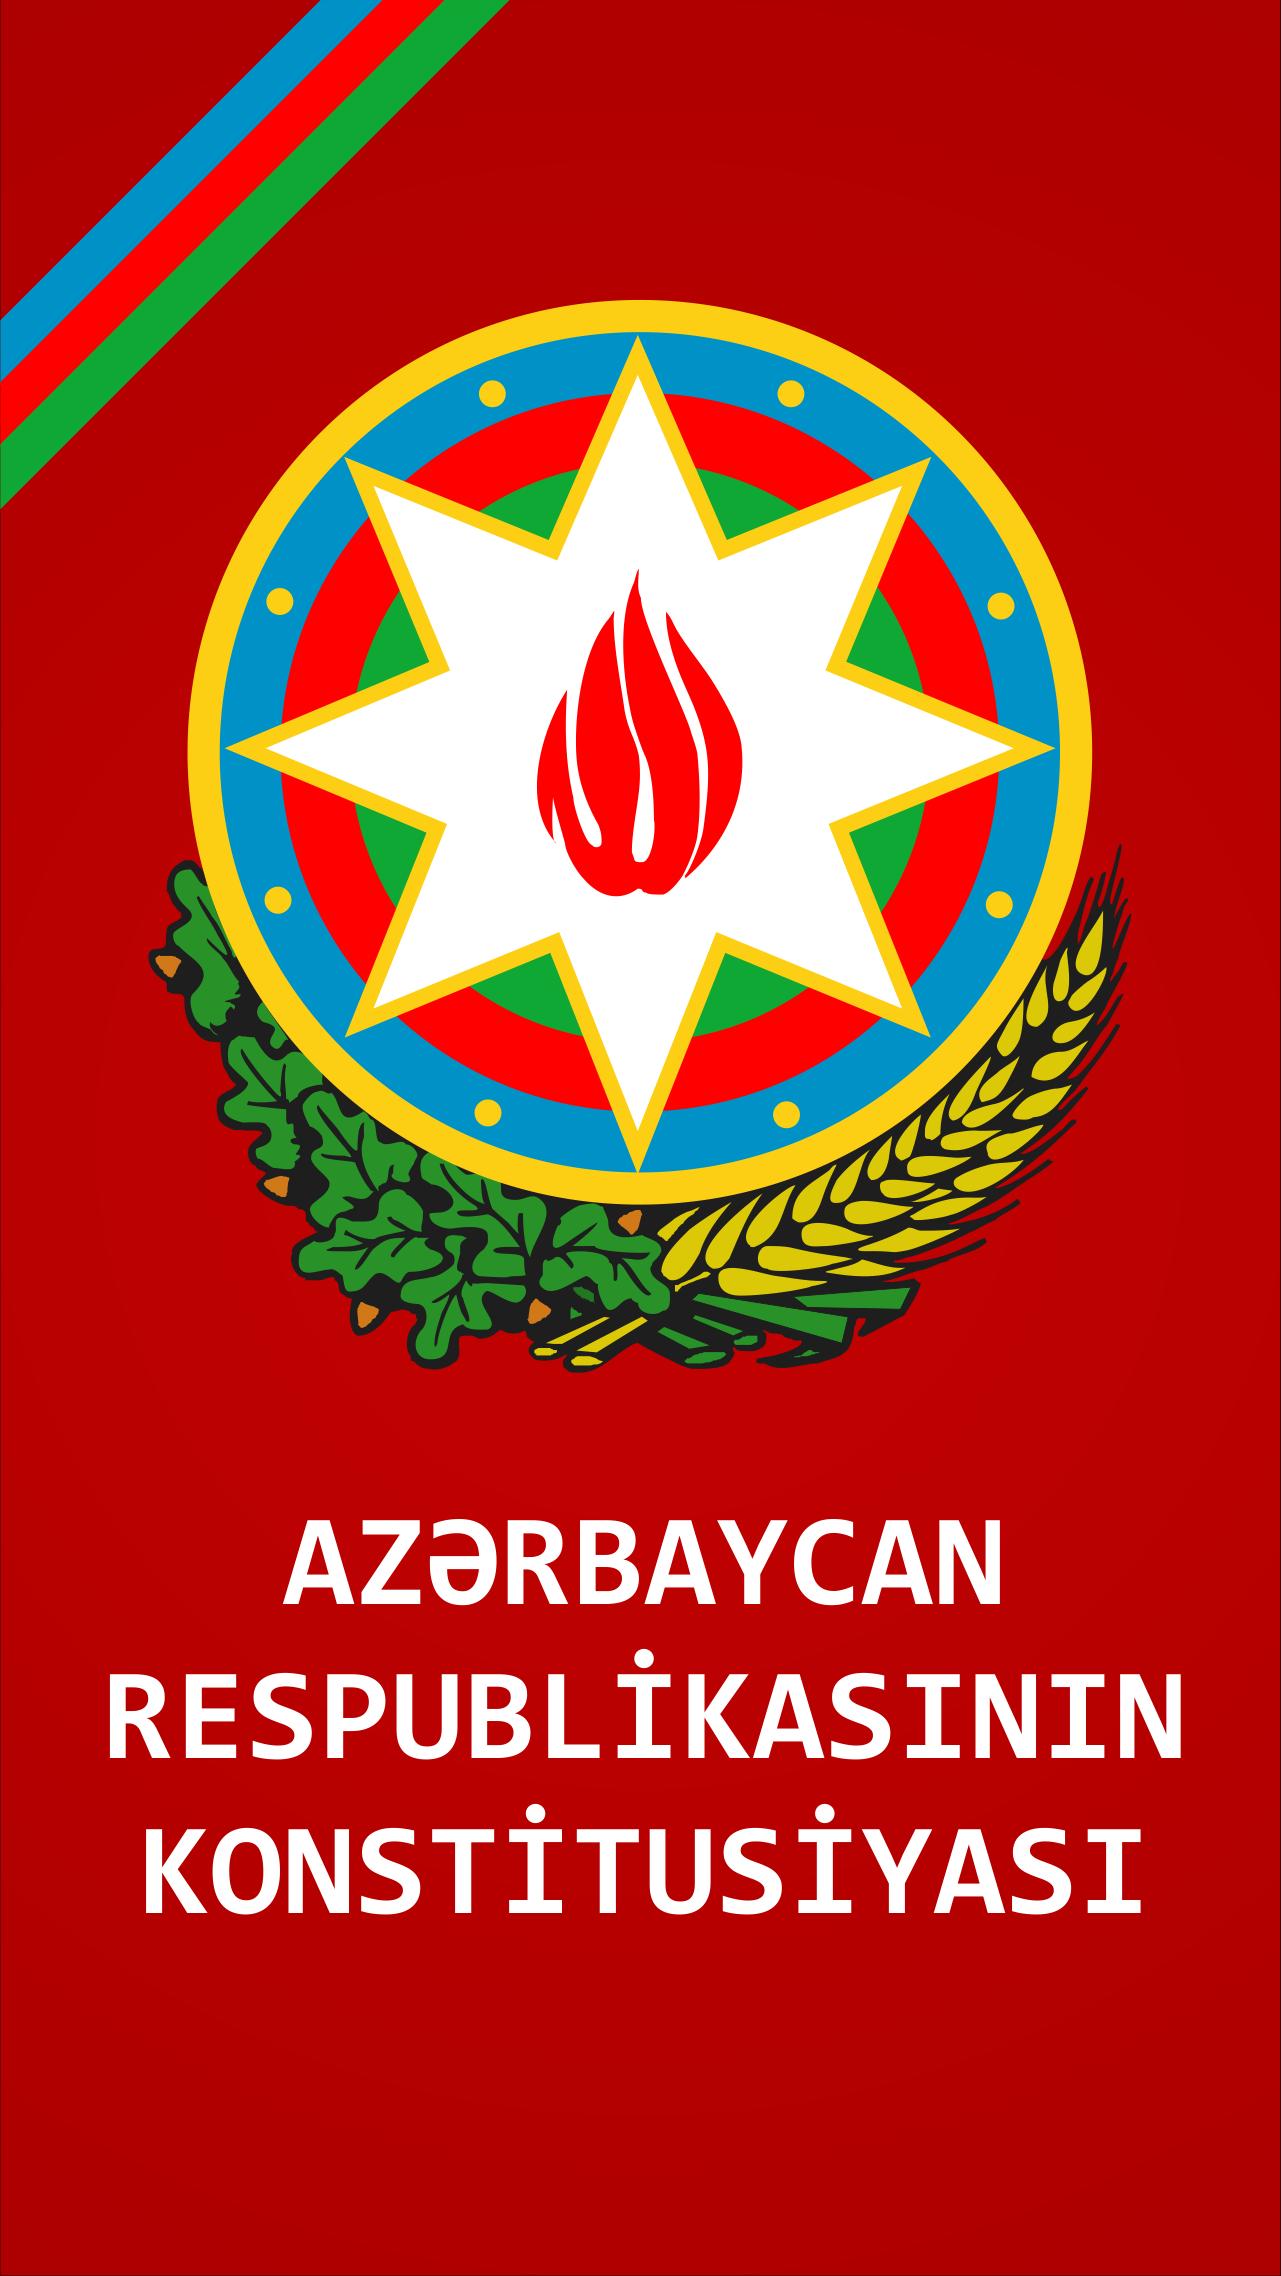 Конституция Республики Азербайджан